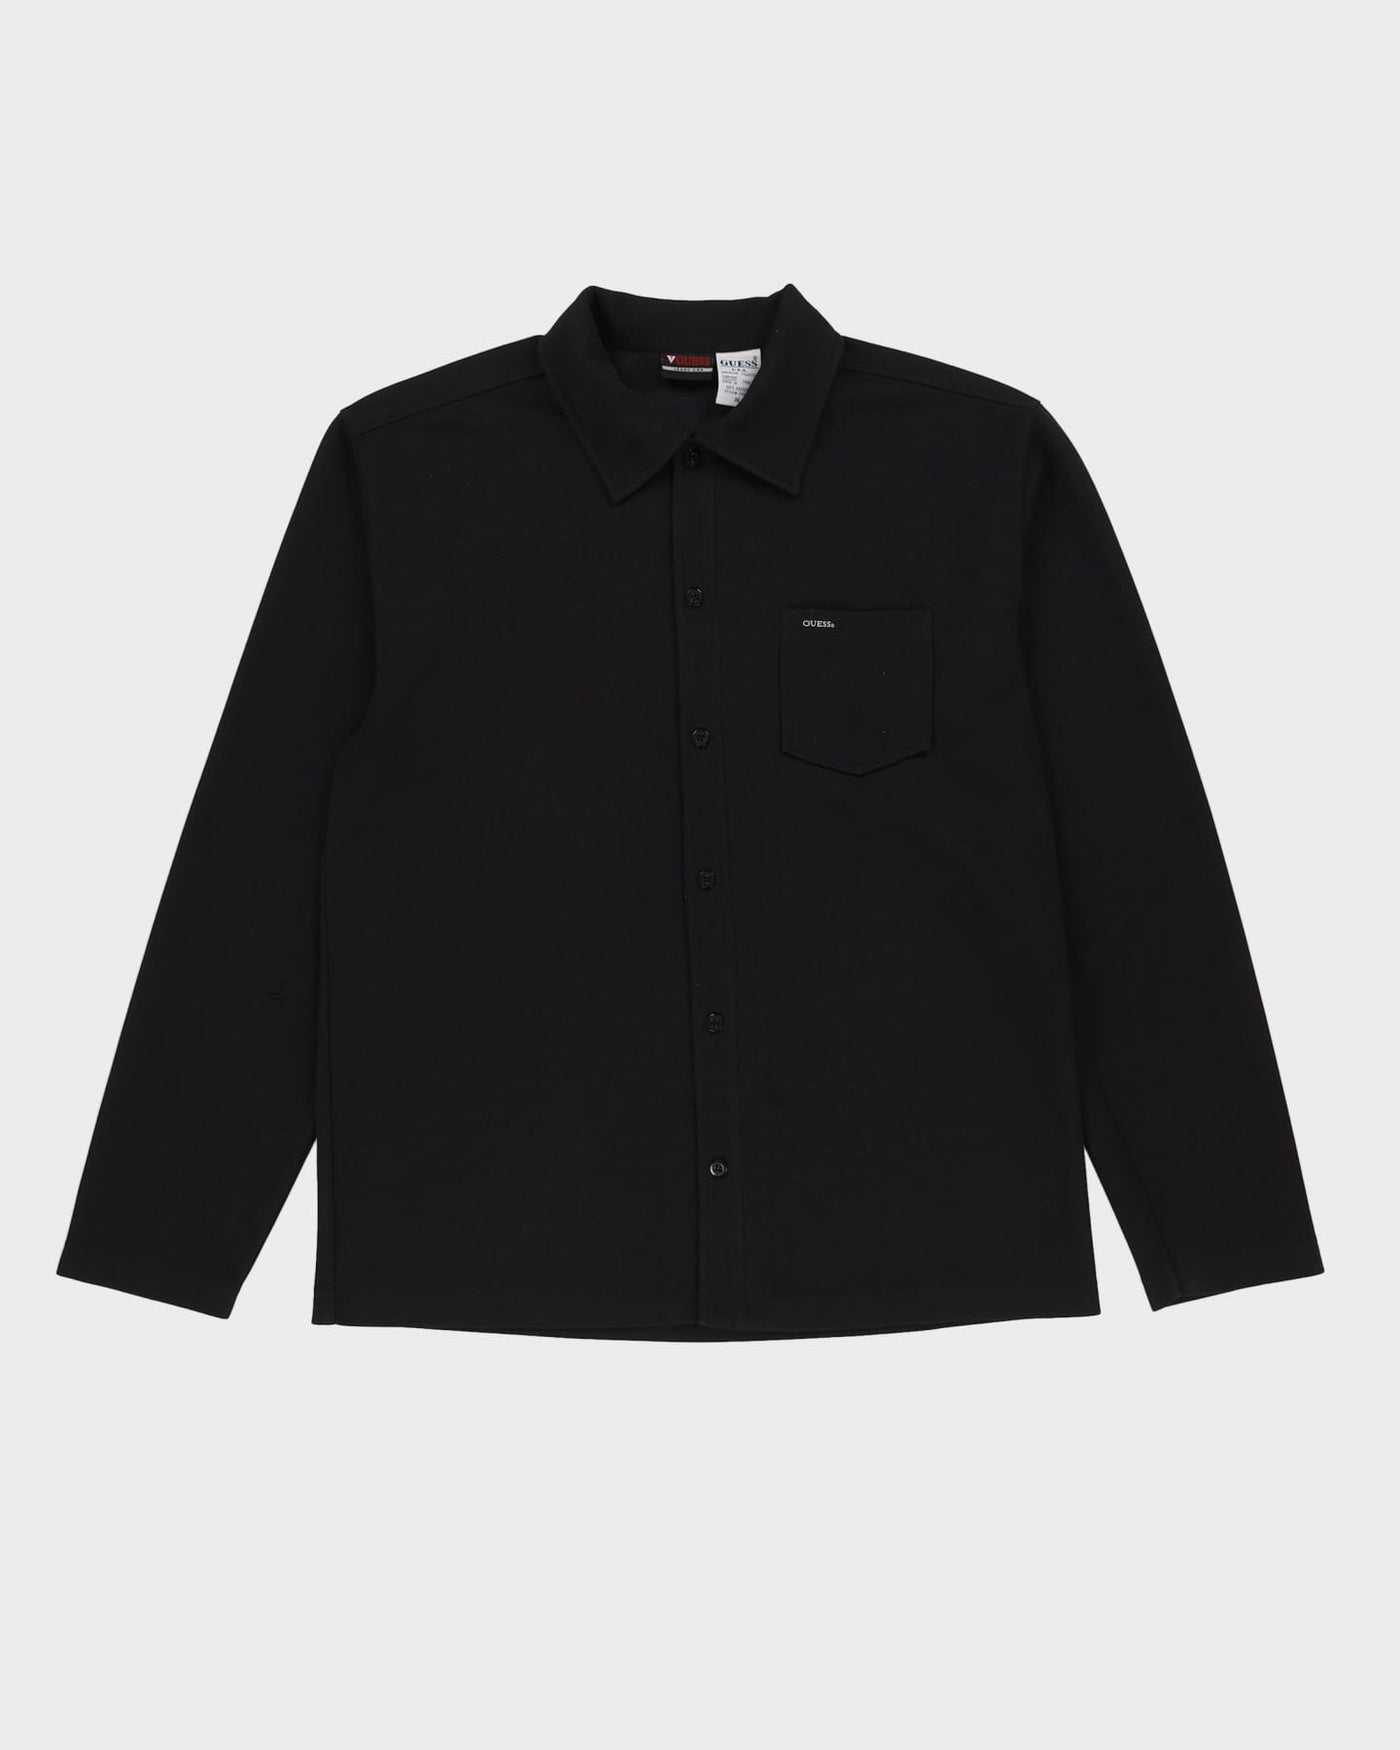 Vintage 90s Guess Black Polyetster Long-Sleeve Shirt - XL